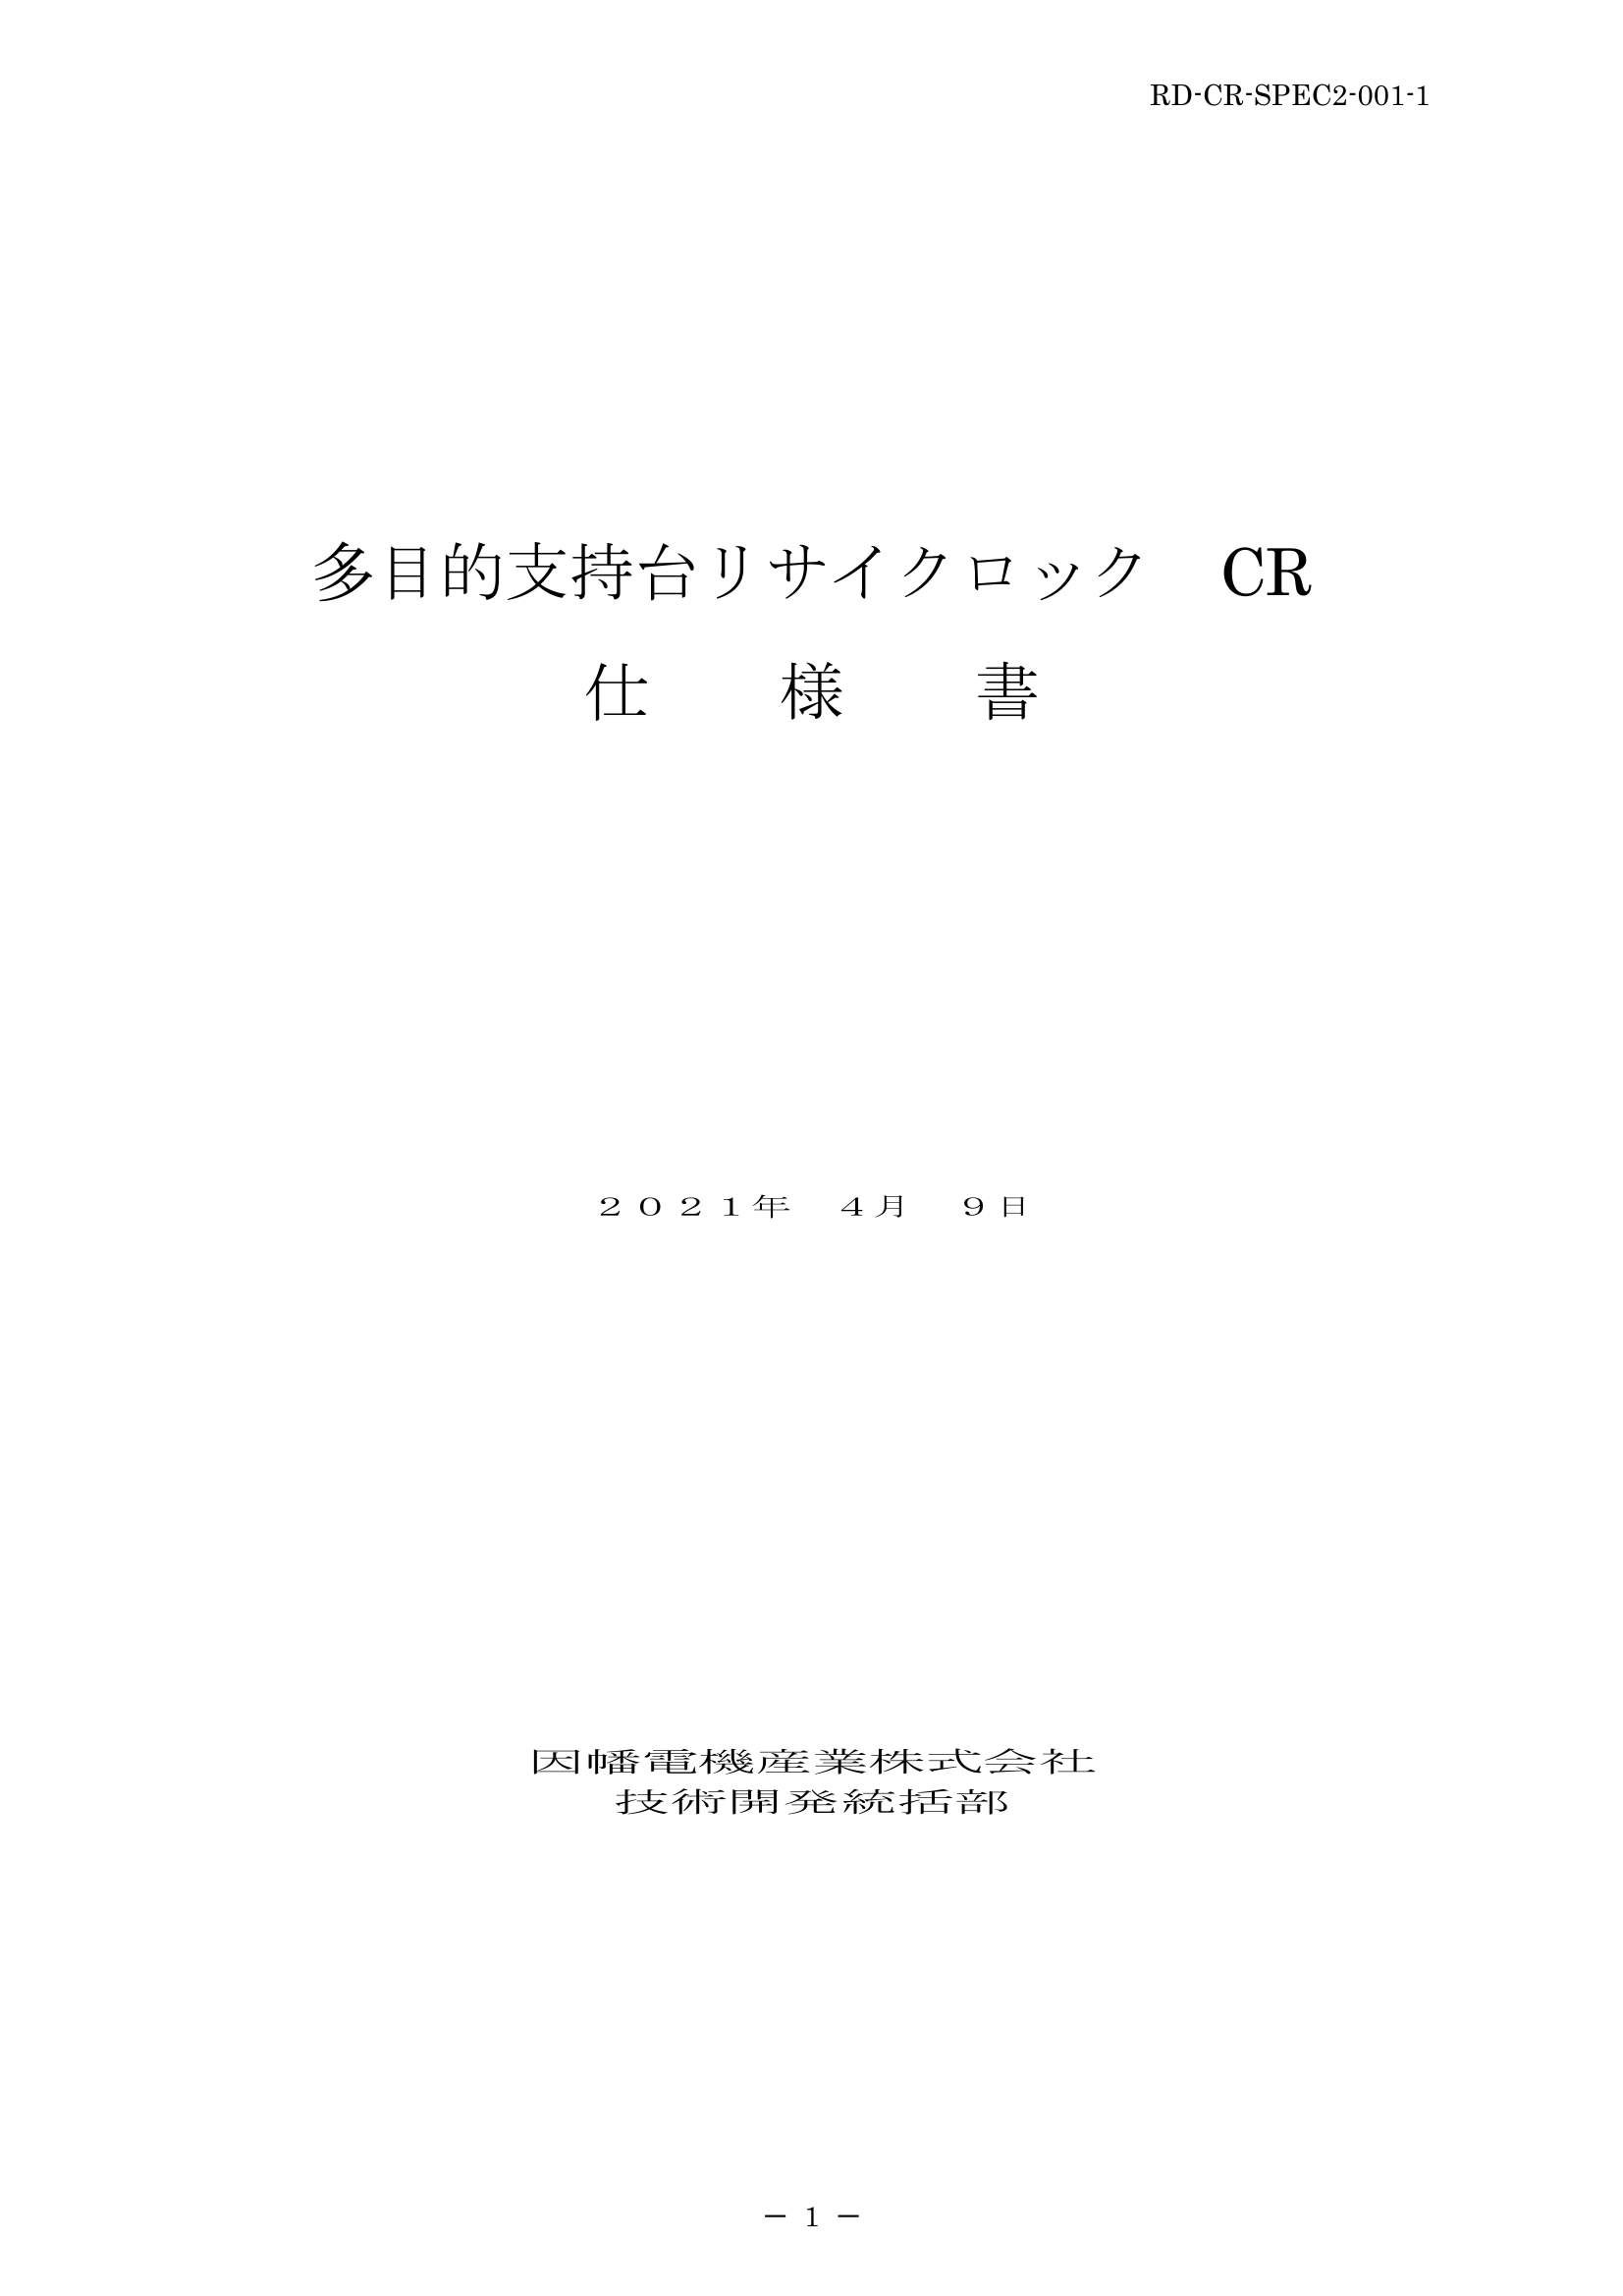 CR_仕様書_20210409.pdf